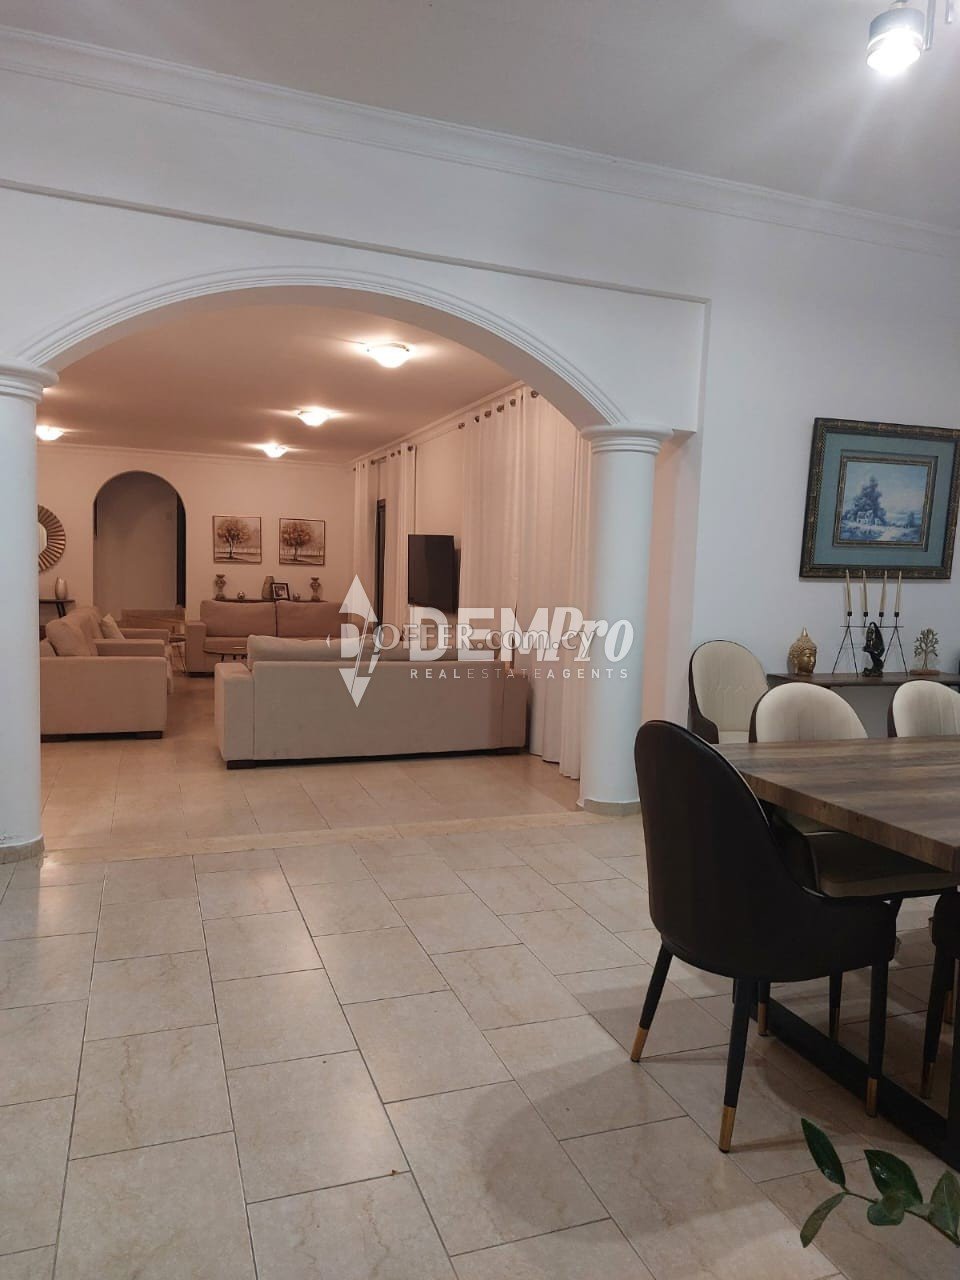 Villa For Rent in Mesogi, Paphos - DP3846 - 6